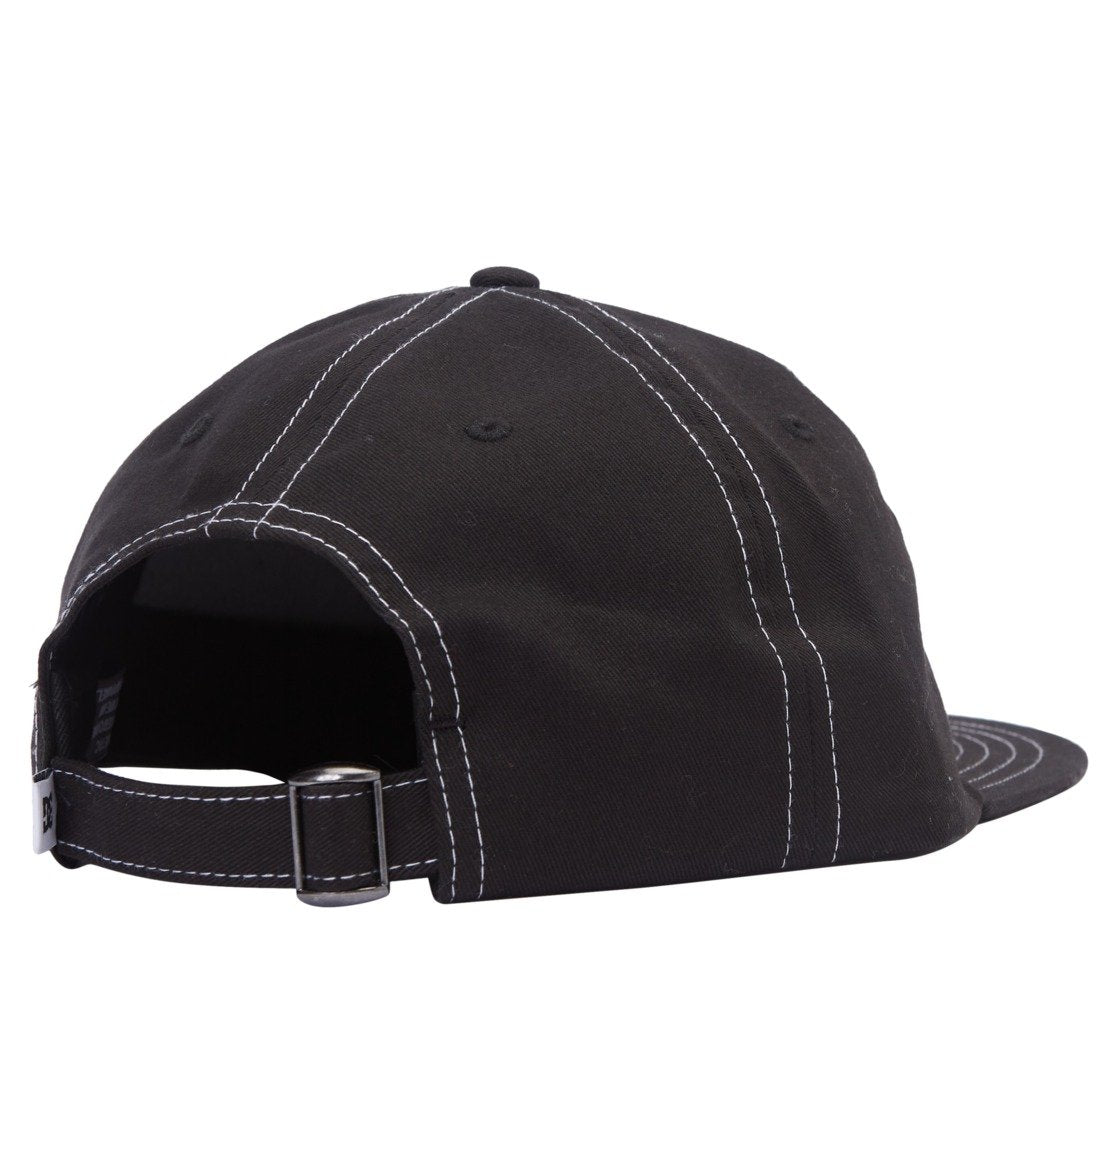 DC - VARSITY CAP - BLACK